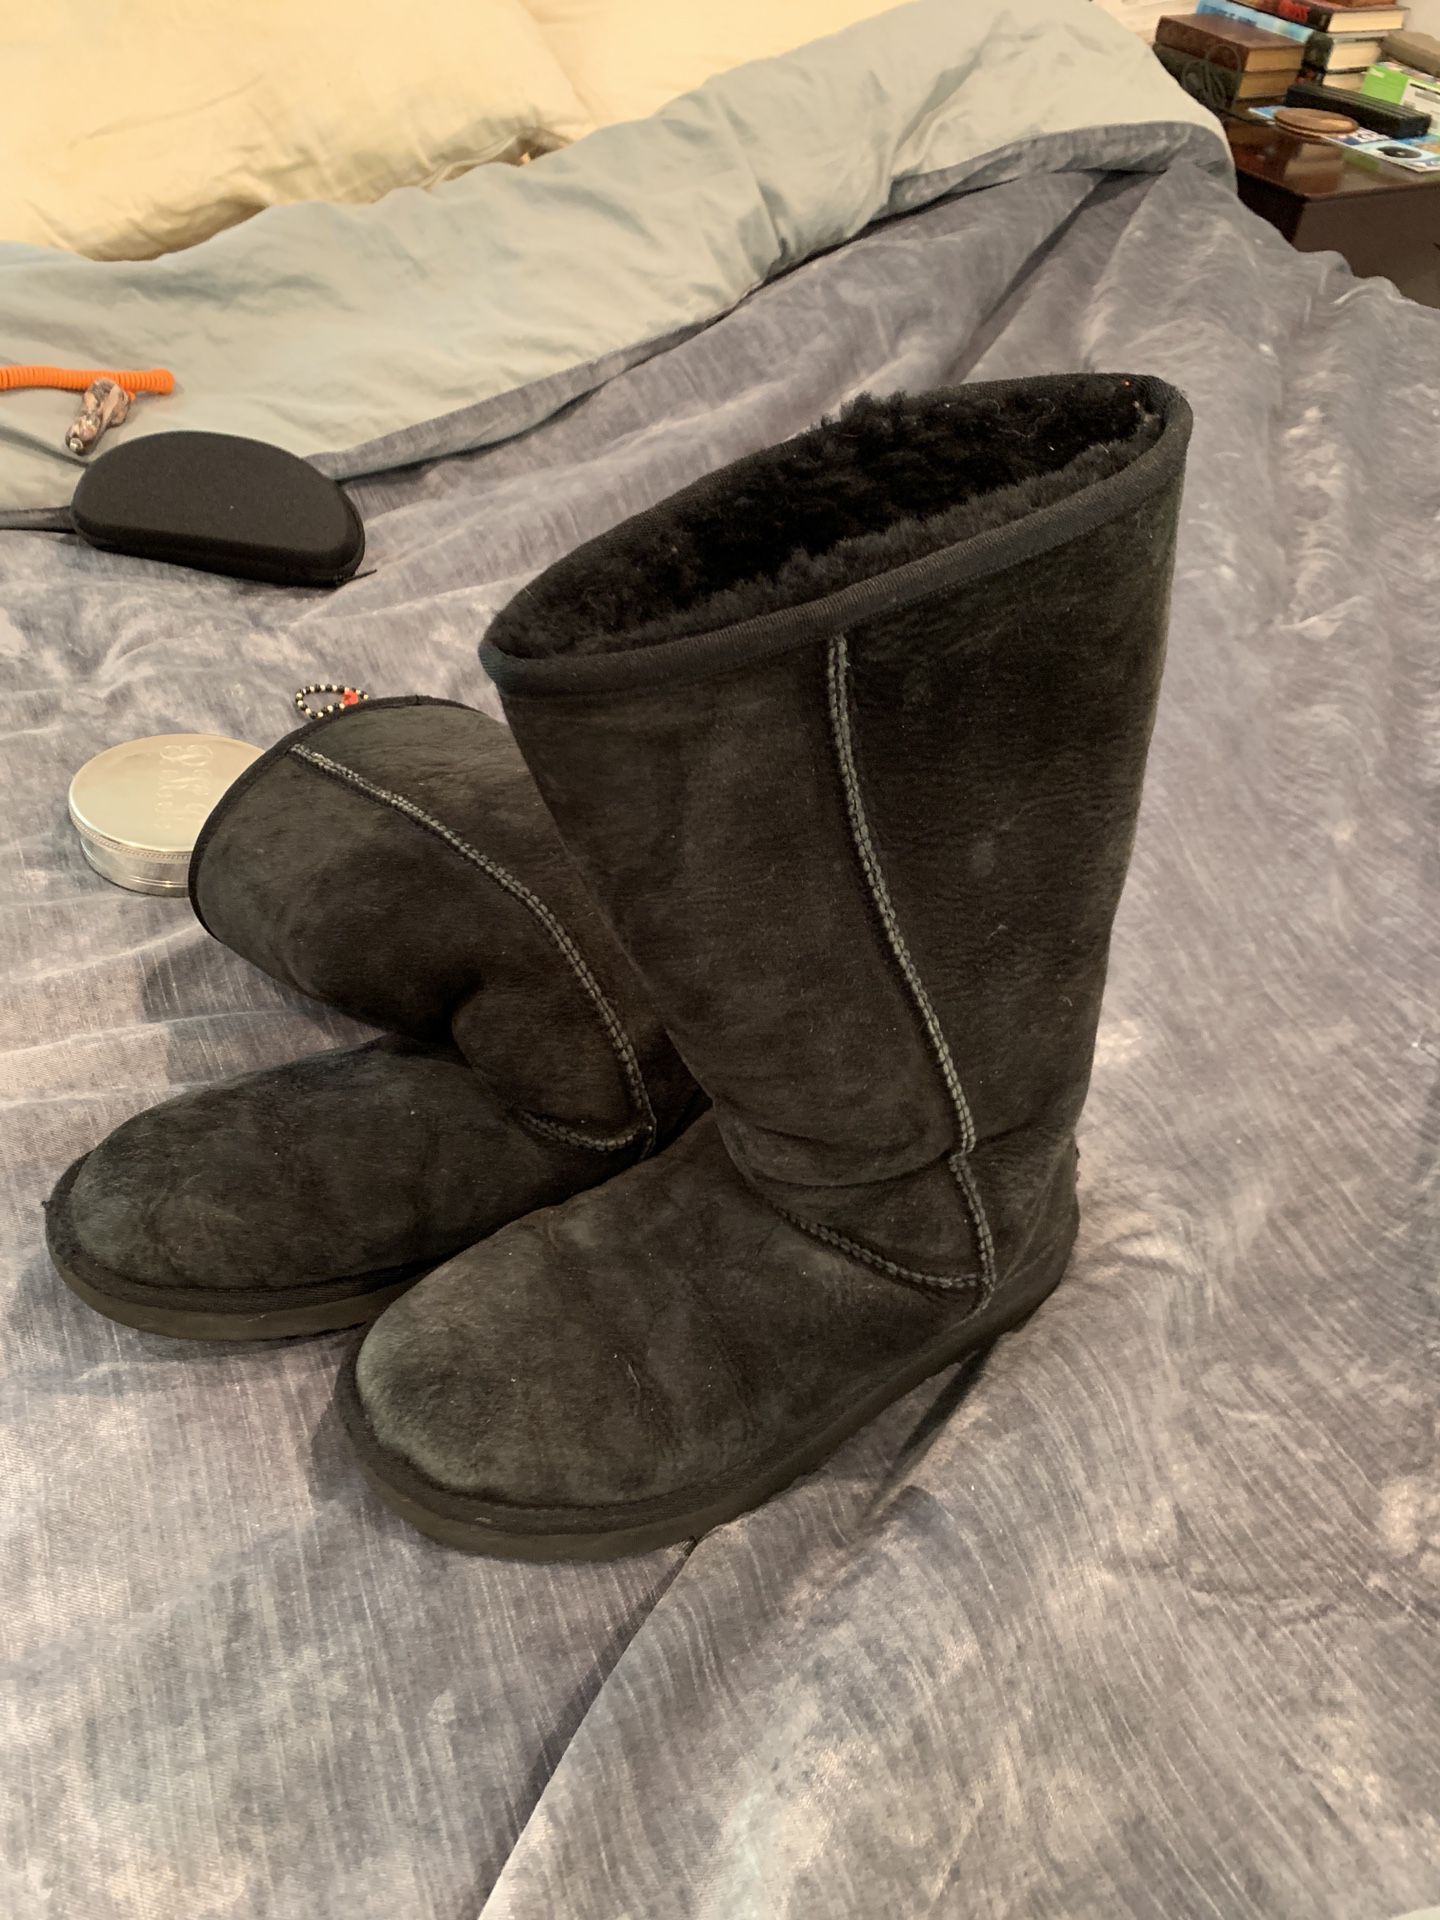 Ugg black boots size 8